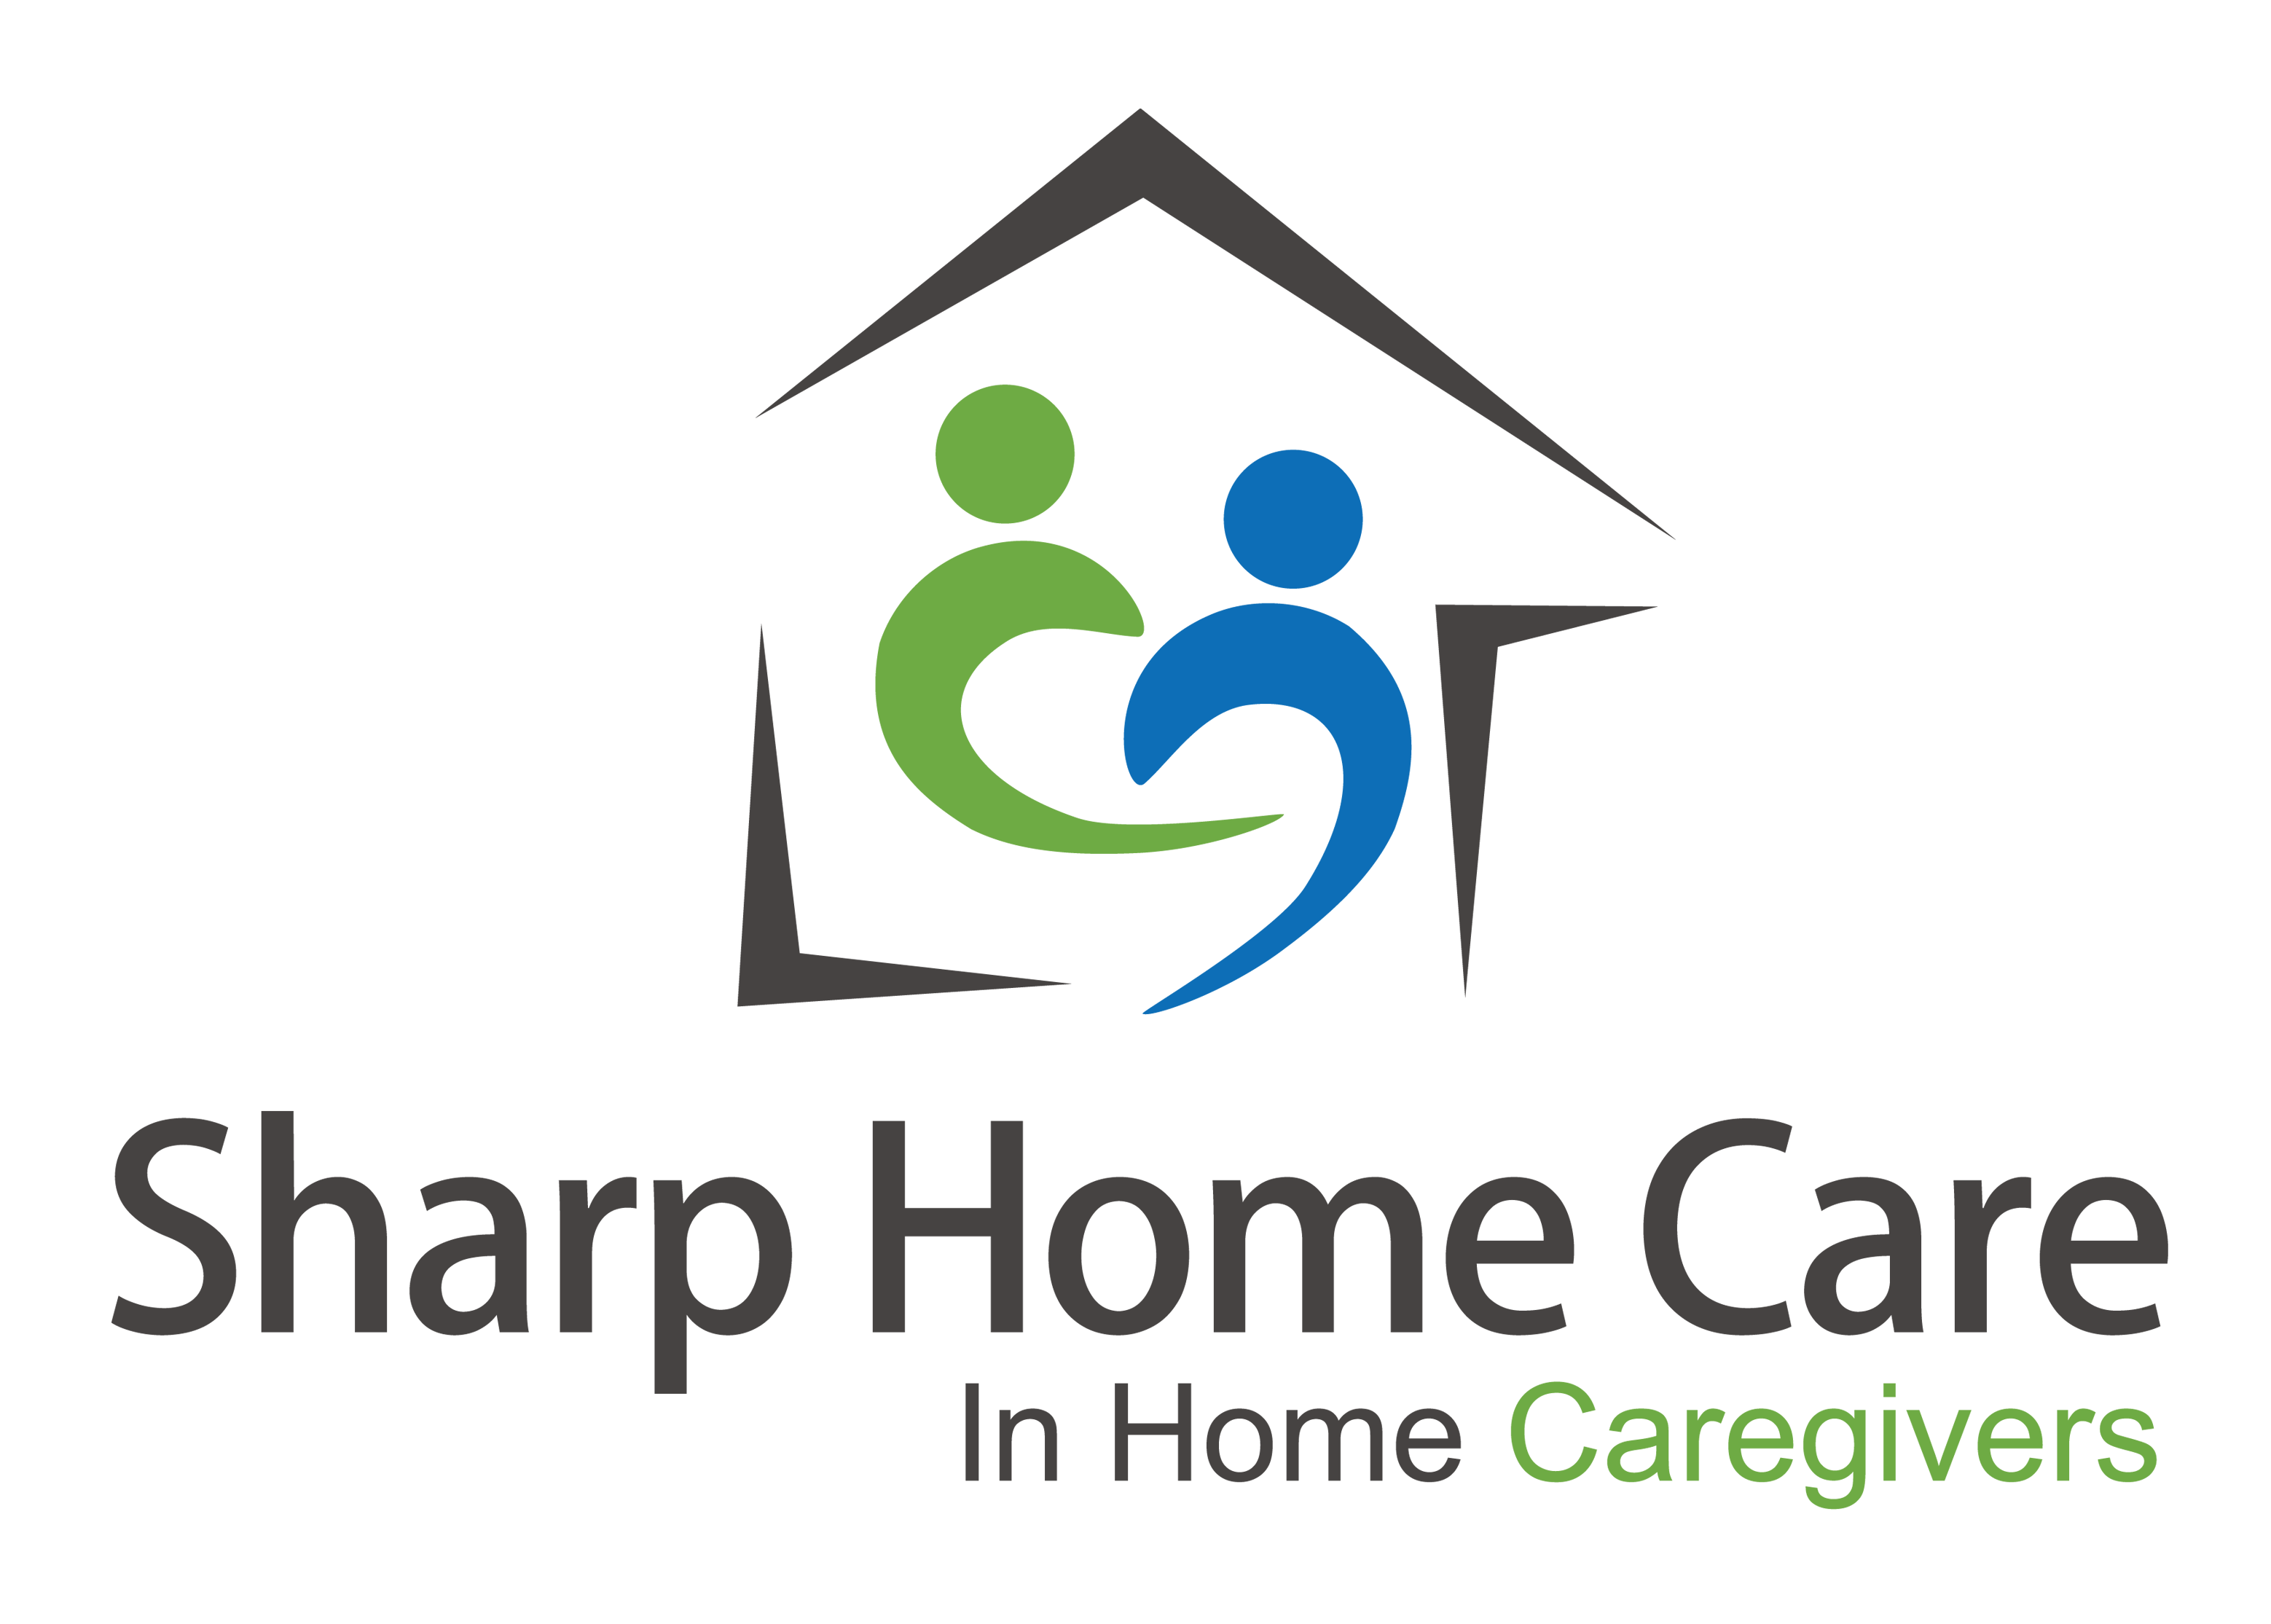 Sharp Home Care